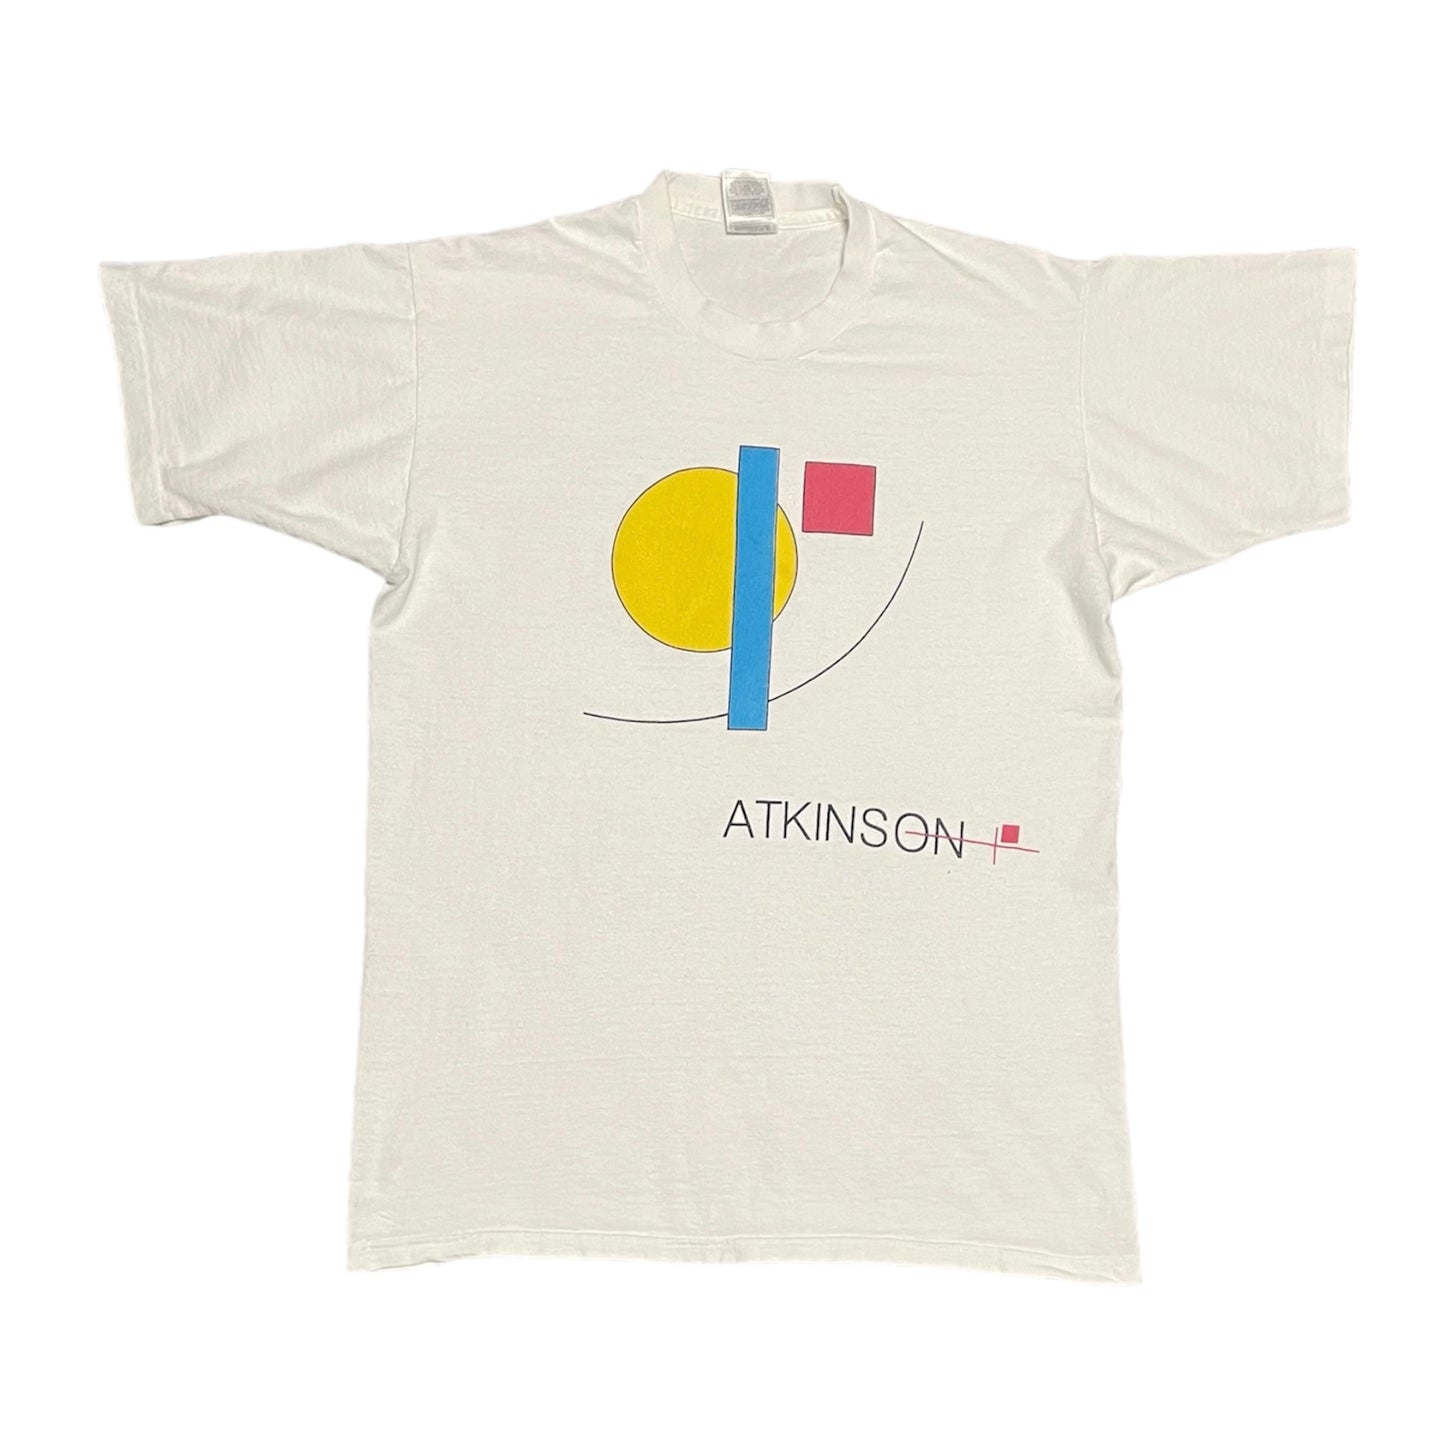 Vintage 1998 Atkinson Design Inc. T-Shirt